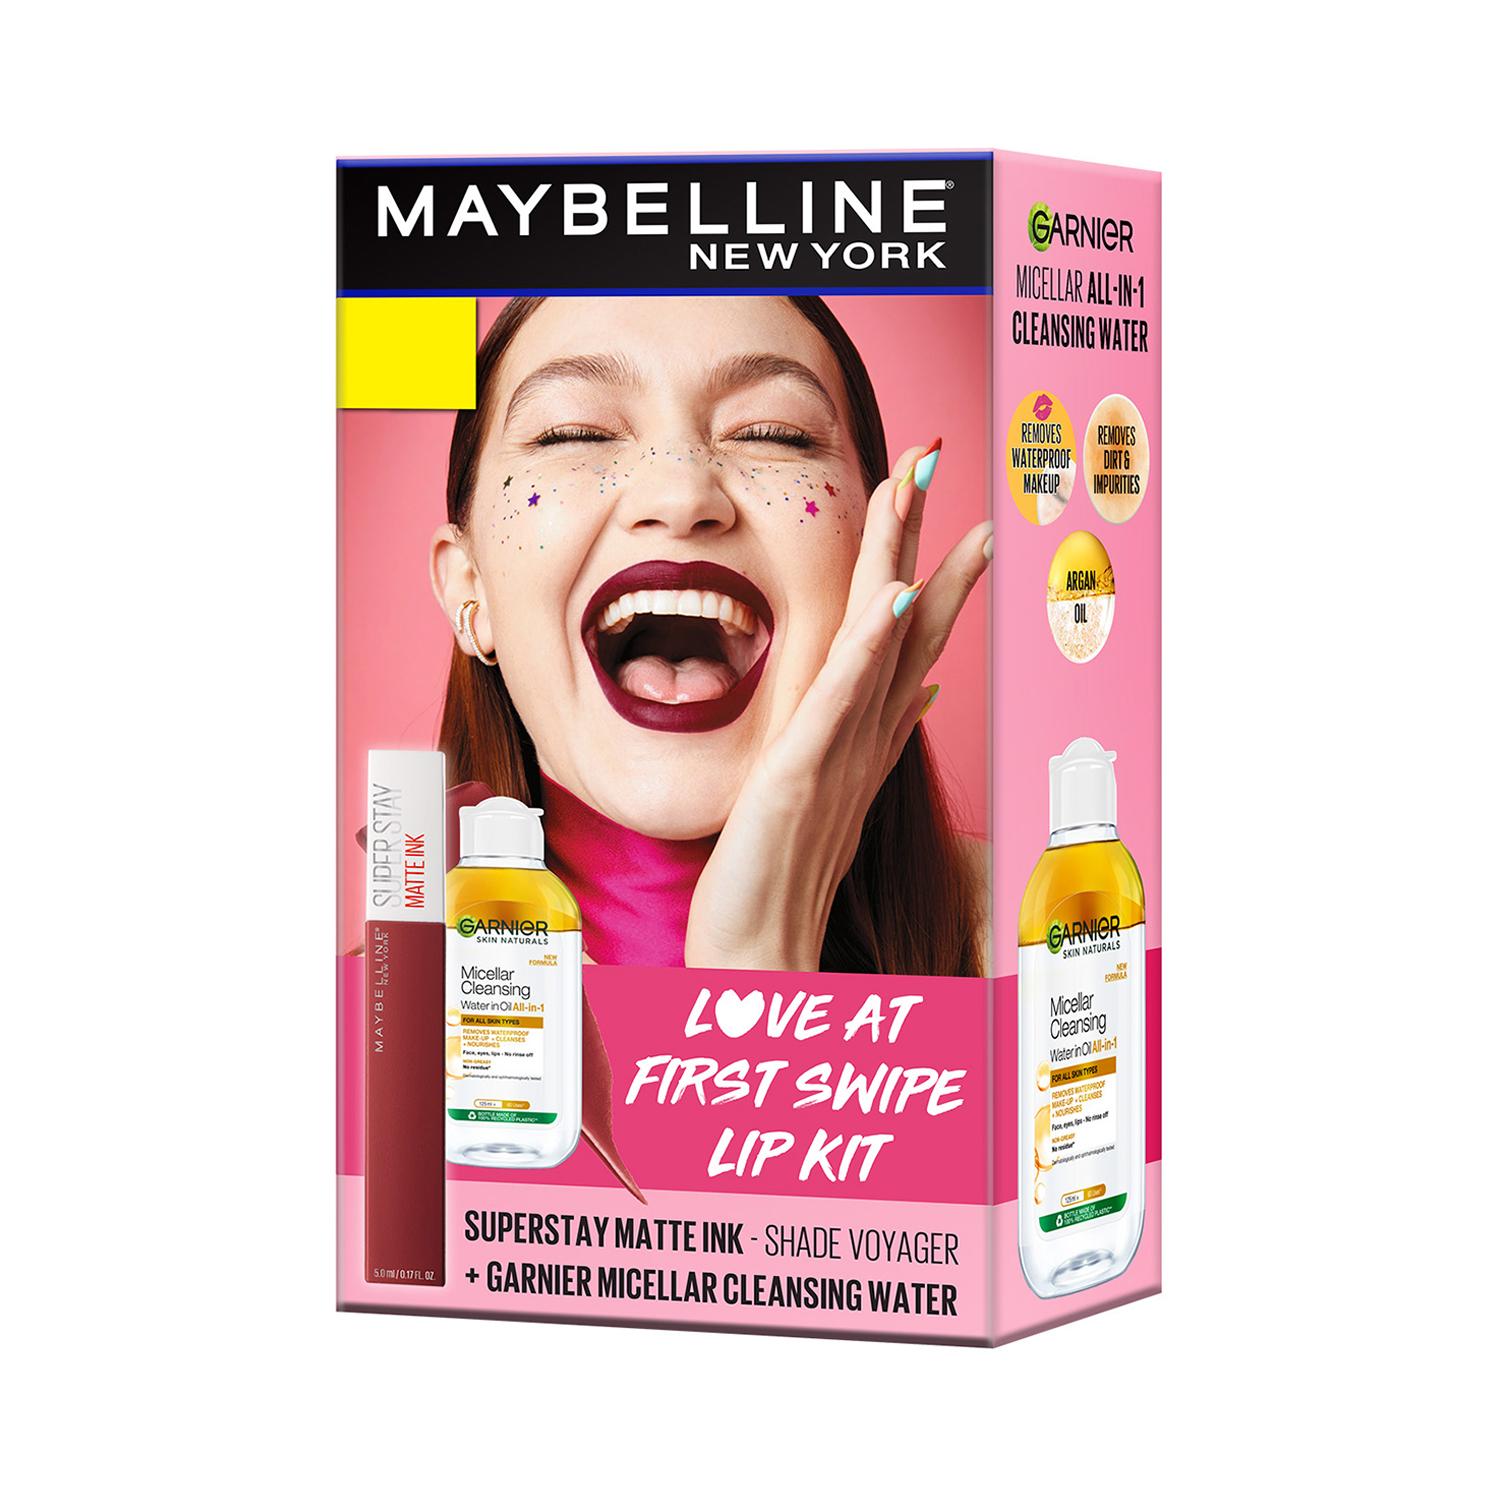 Maybelline New York | Maybelline Love at First Swipe Lip Kit - Superstay Matte Ink Voyager+ Garnier Biphase Micellar